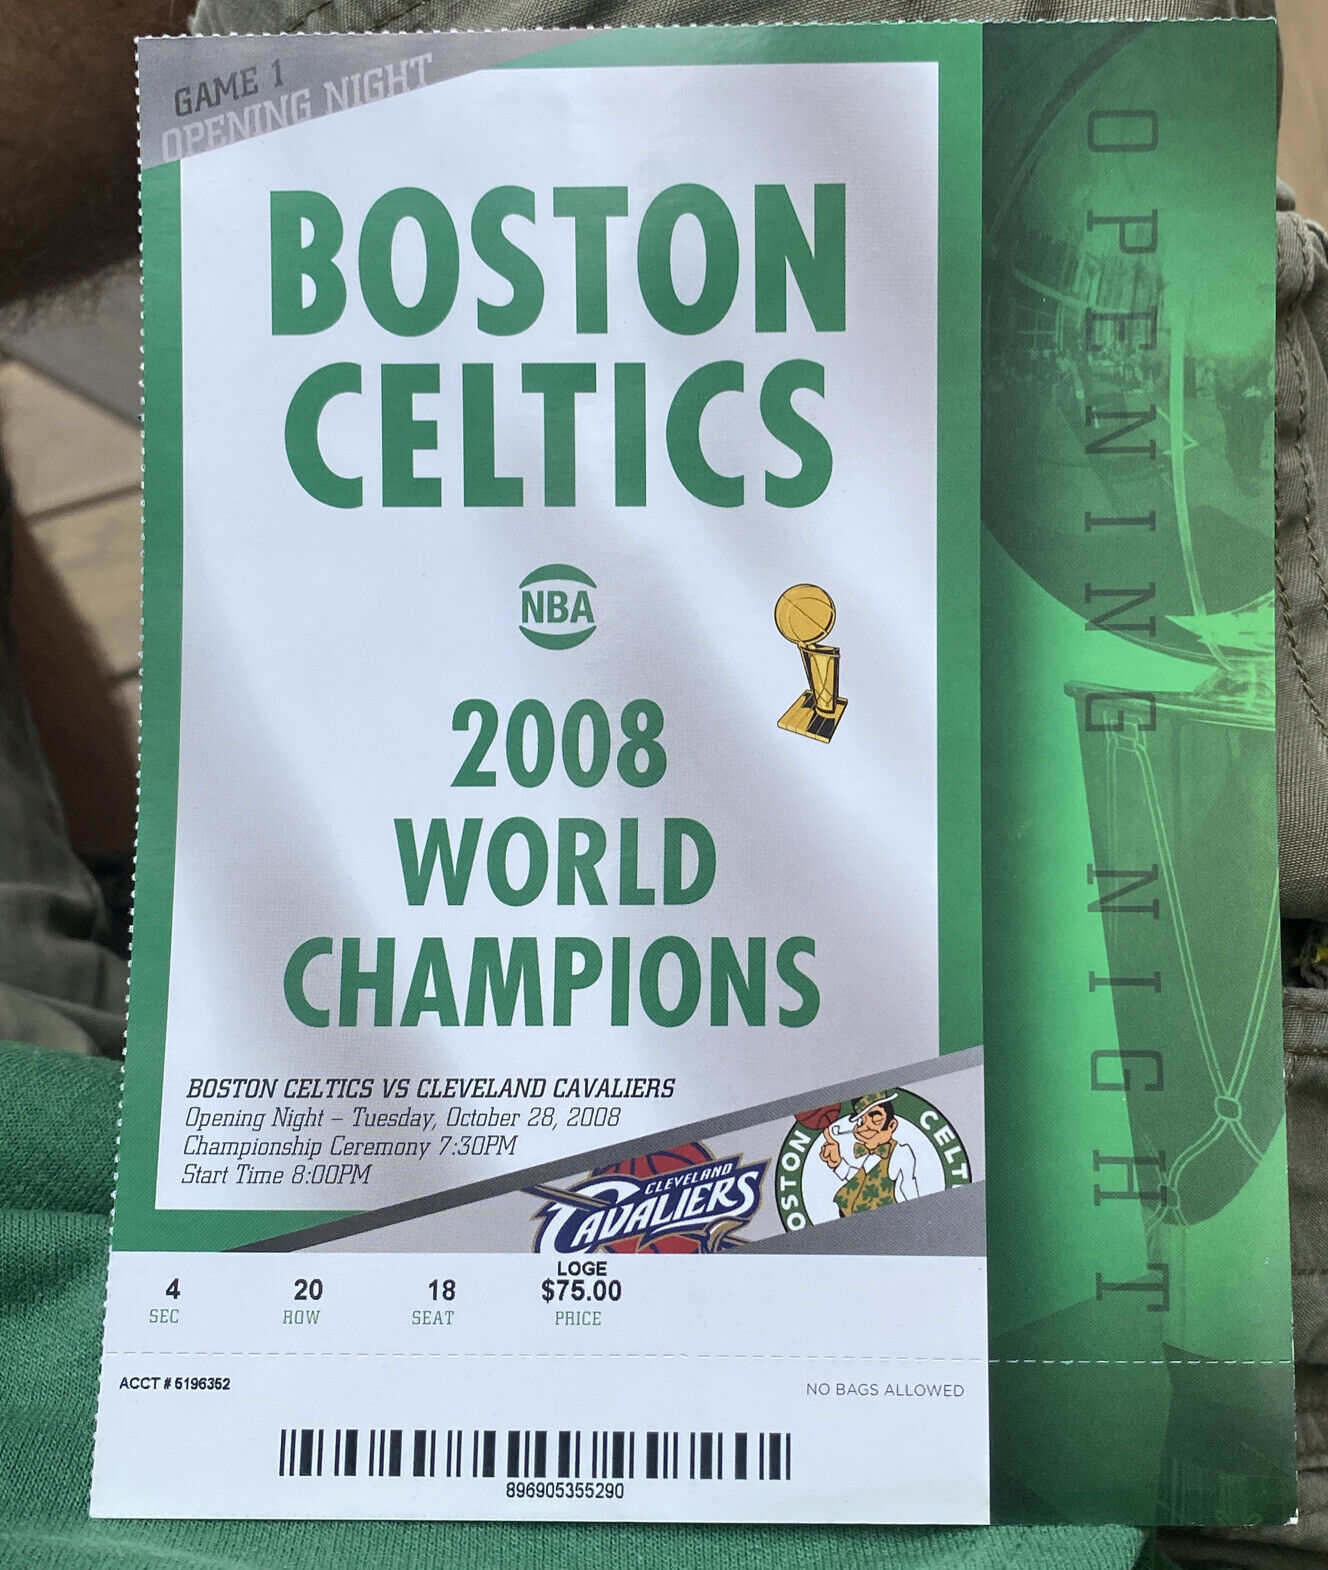 Cleveland Cavs @ Boston Celtics 2008 Opening Night NBA Ticket